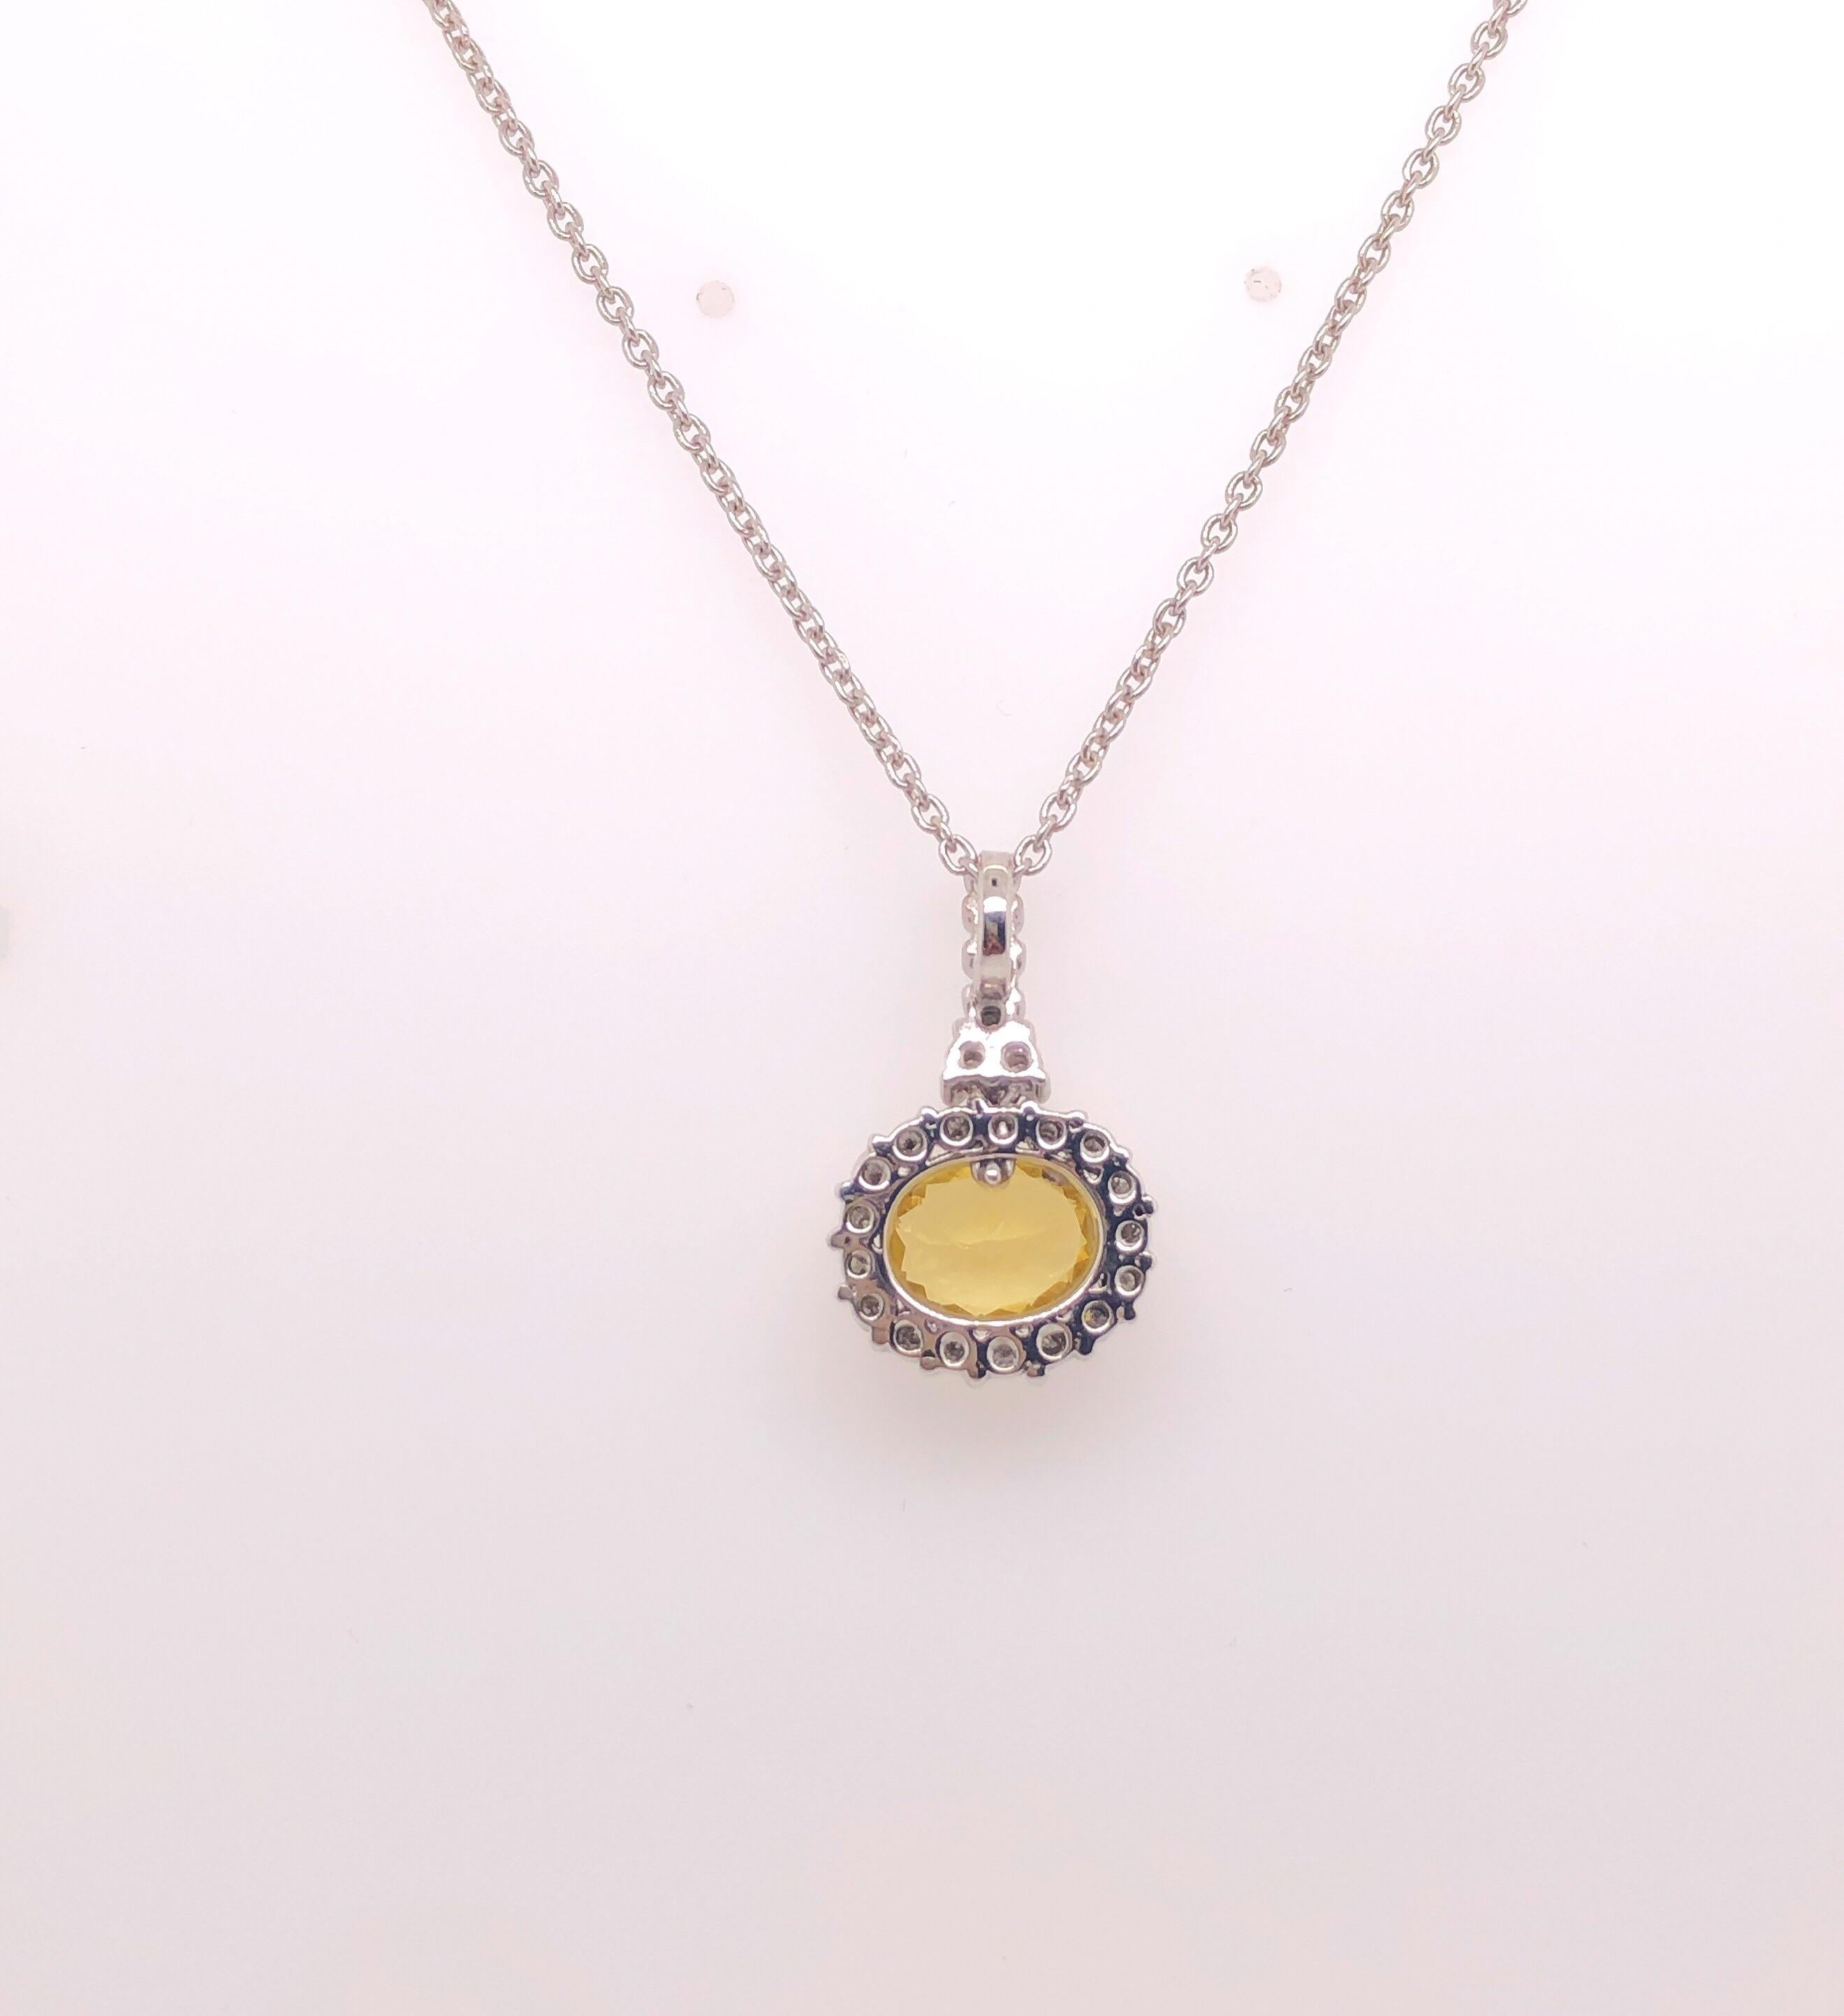 Oval Cut 2.28 Carat Oval Golden Beryl Pendant Necklace with 0.69 Carat Round Diamonds For Sale